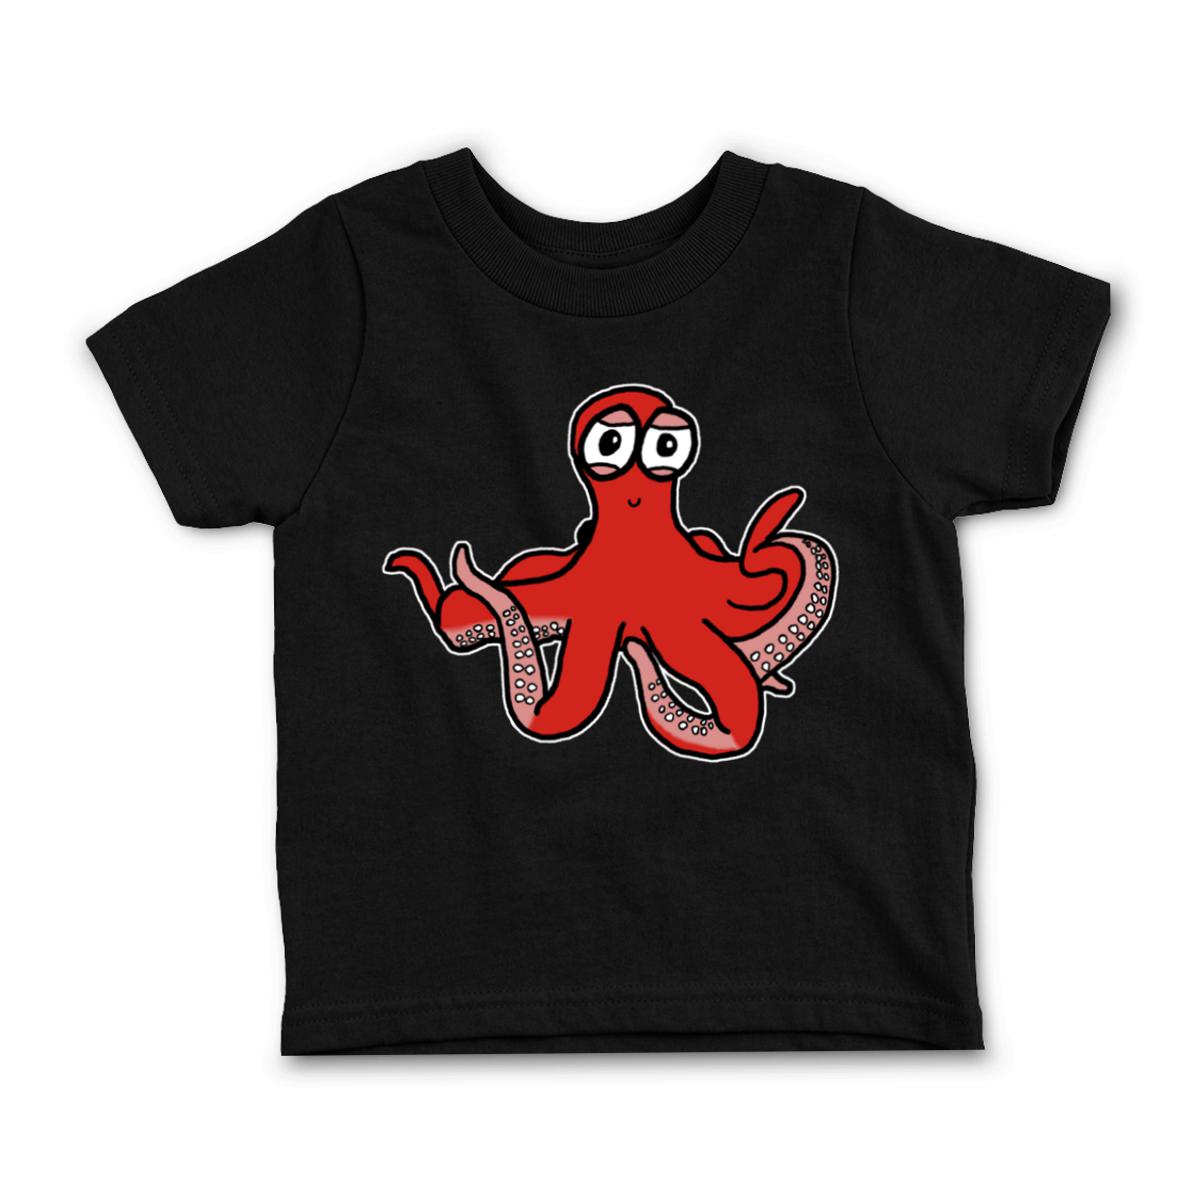 Octopus Toddler Tee 56T black